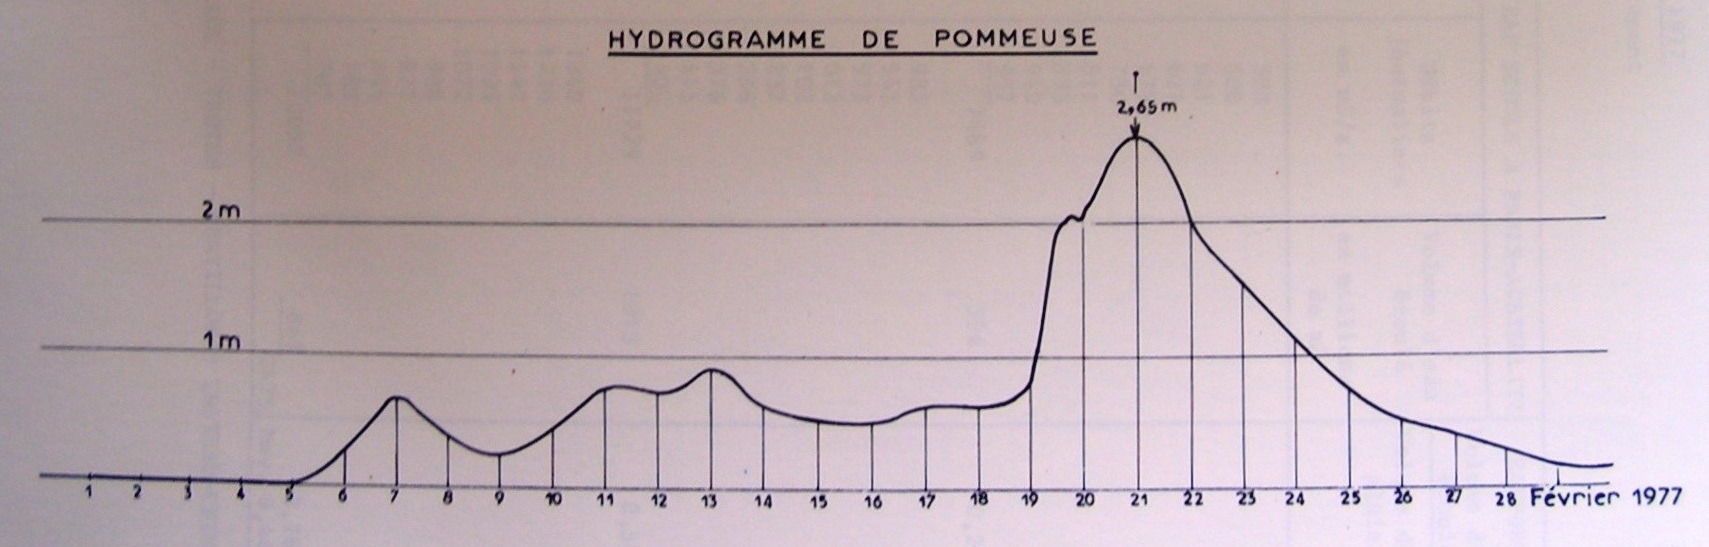 Hydrogramme du Grand-Morin à Pommeuse en février 1977 